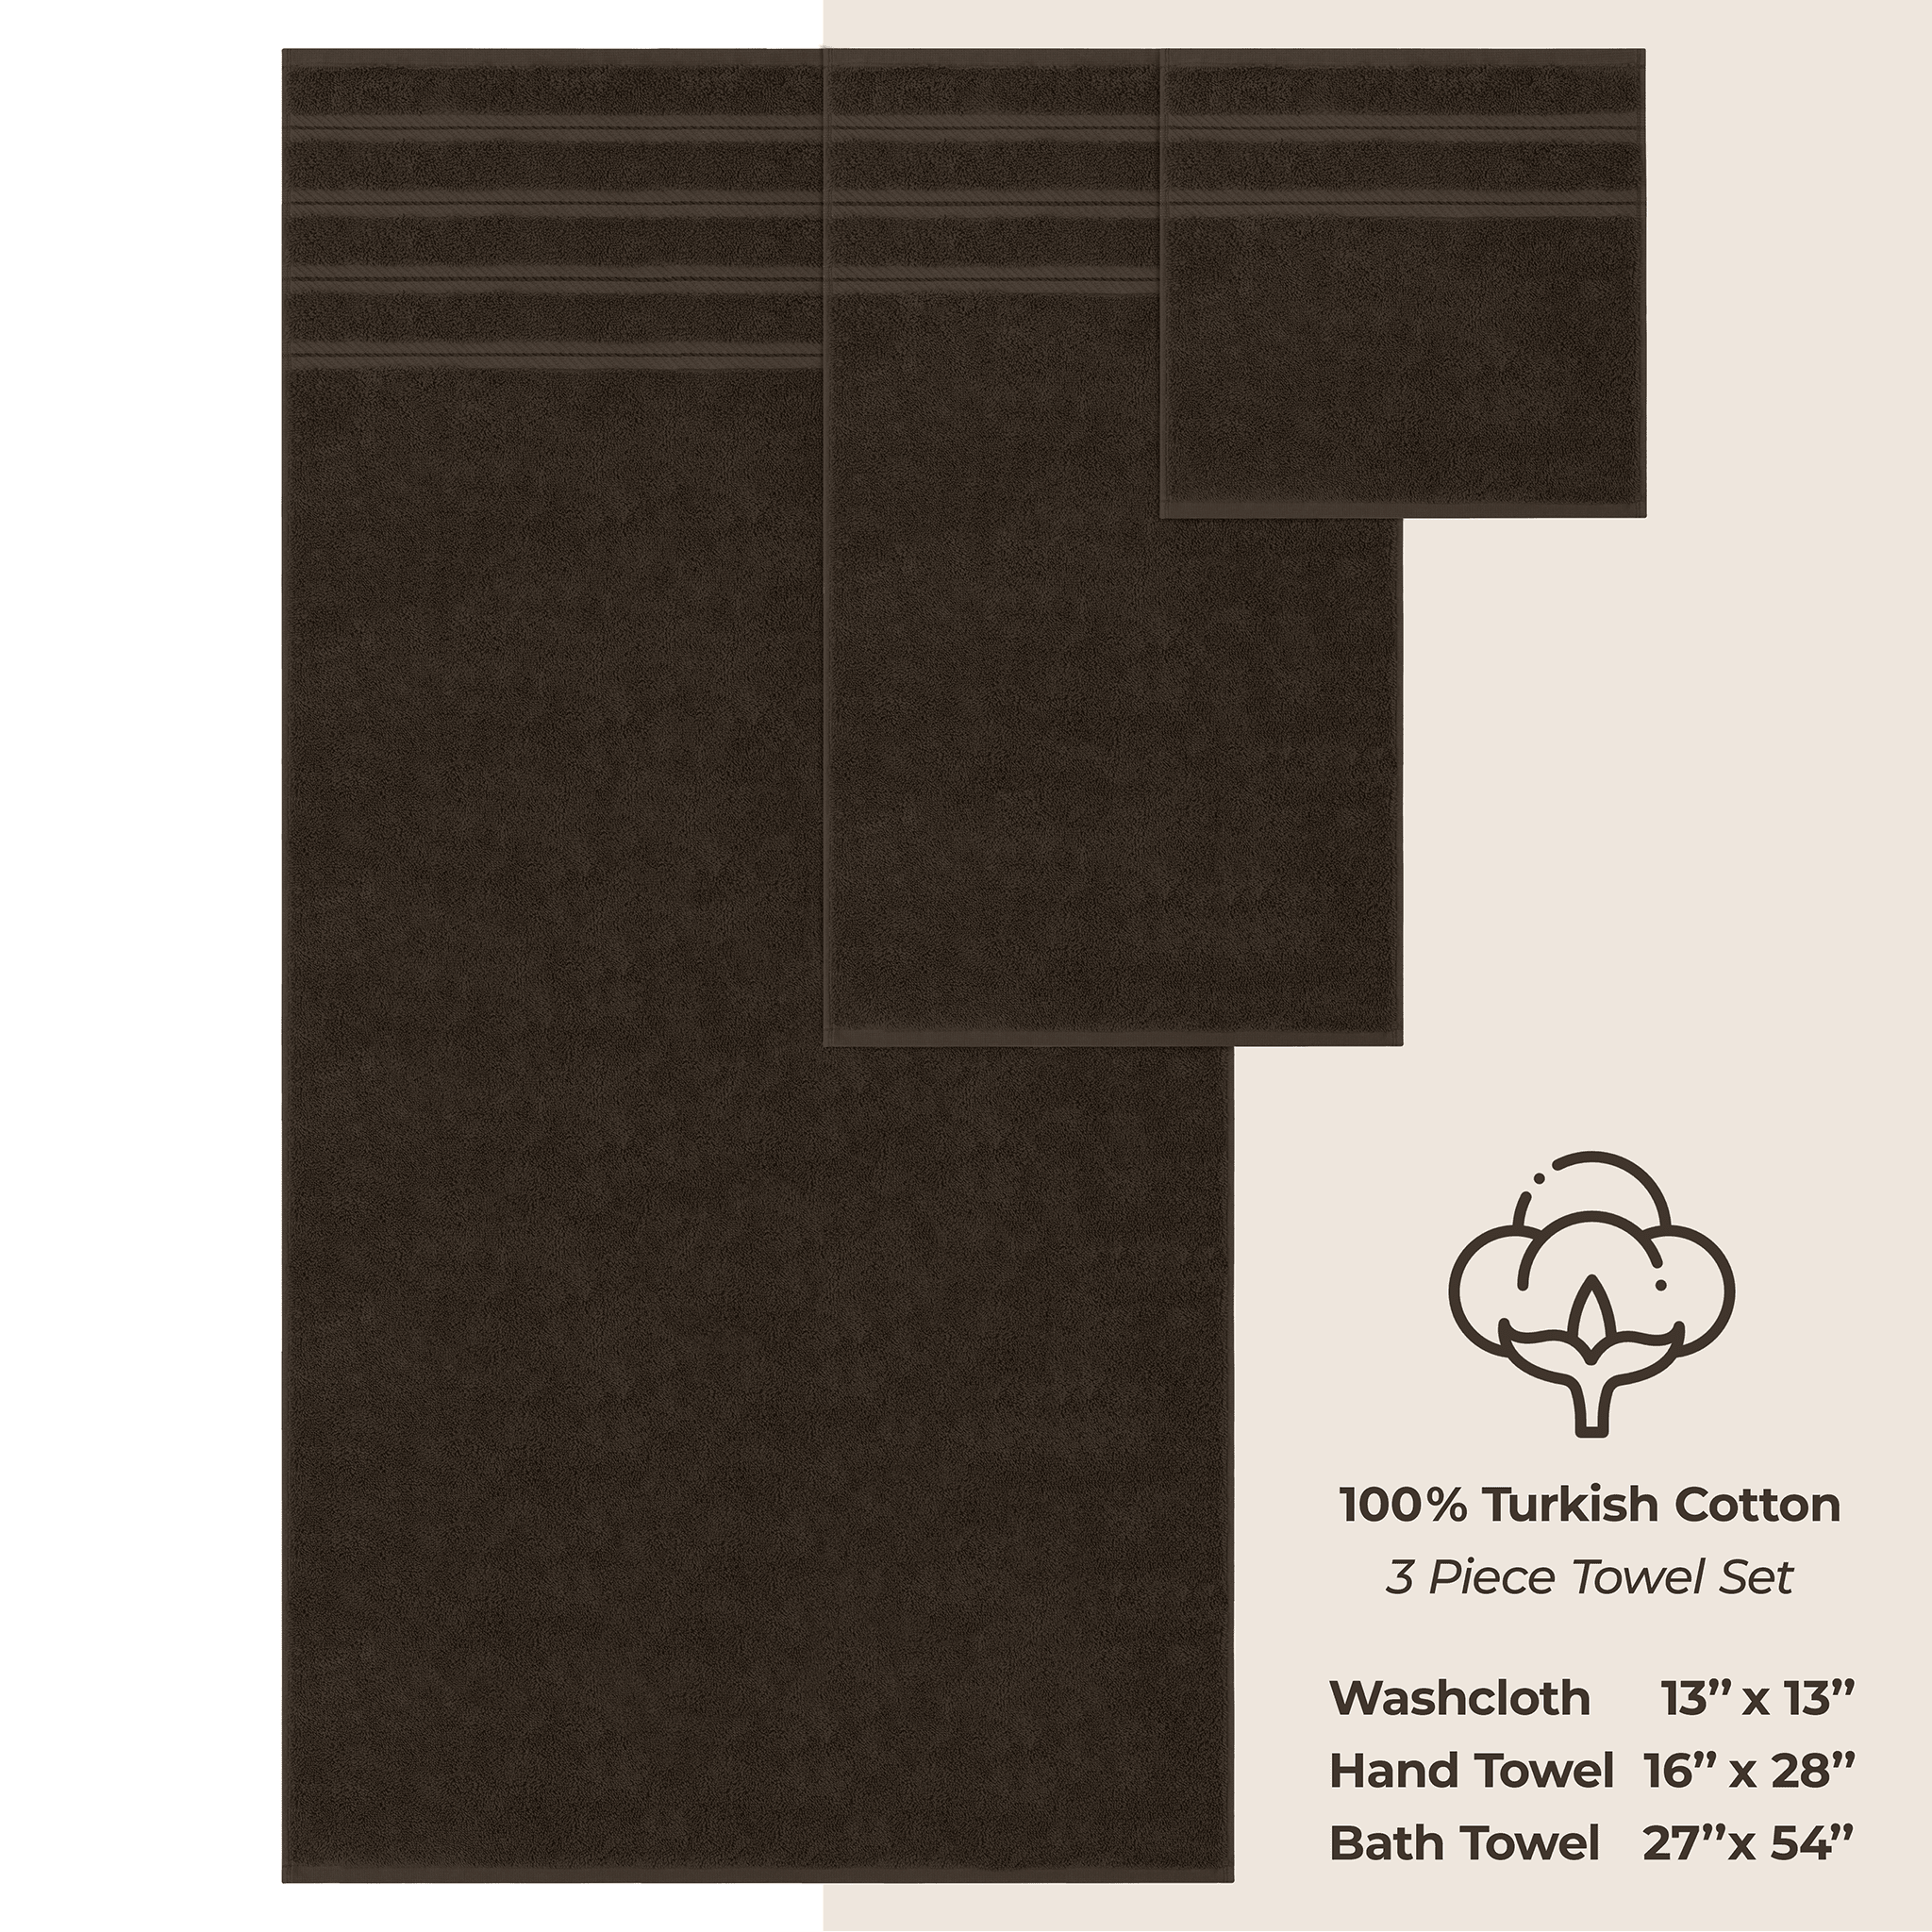 American Soft Linen - 3 Piece Turkish Cotton Towel Set - Chocolate-Brown - 4